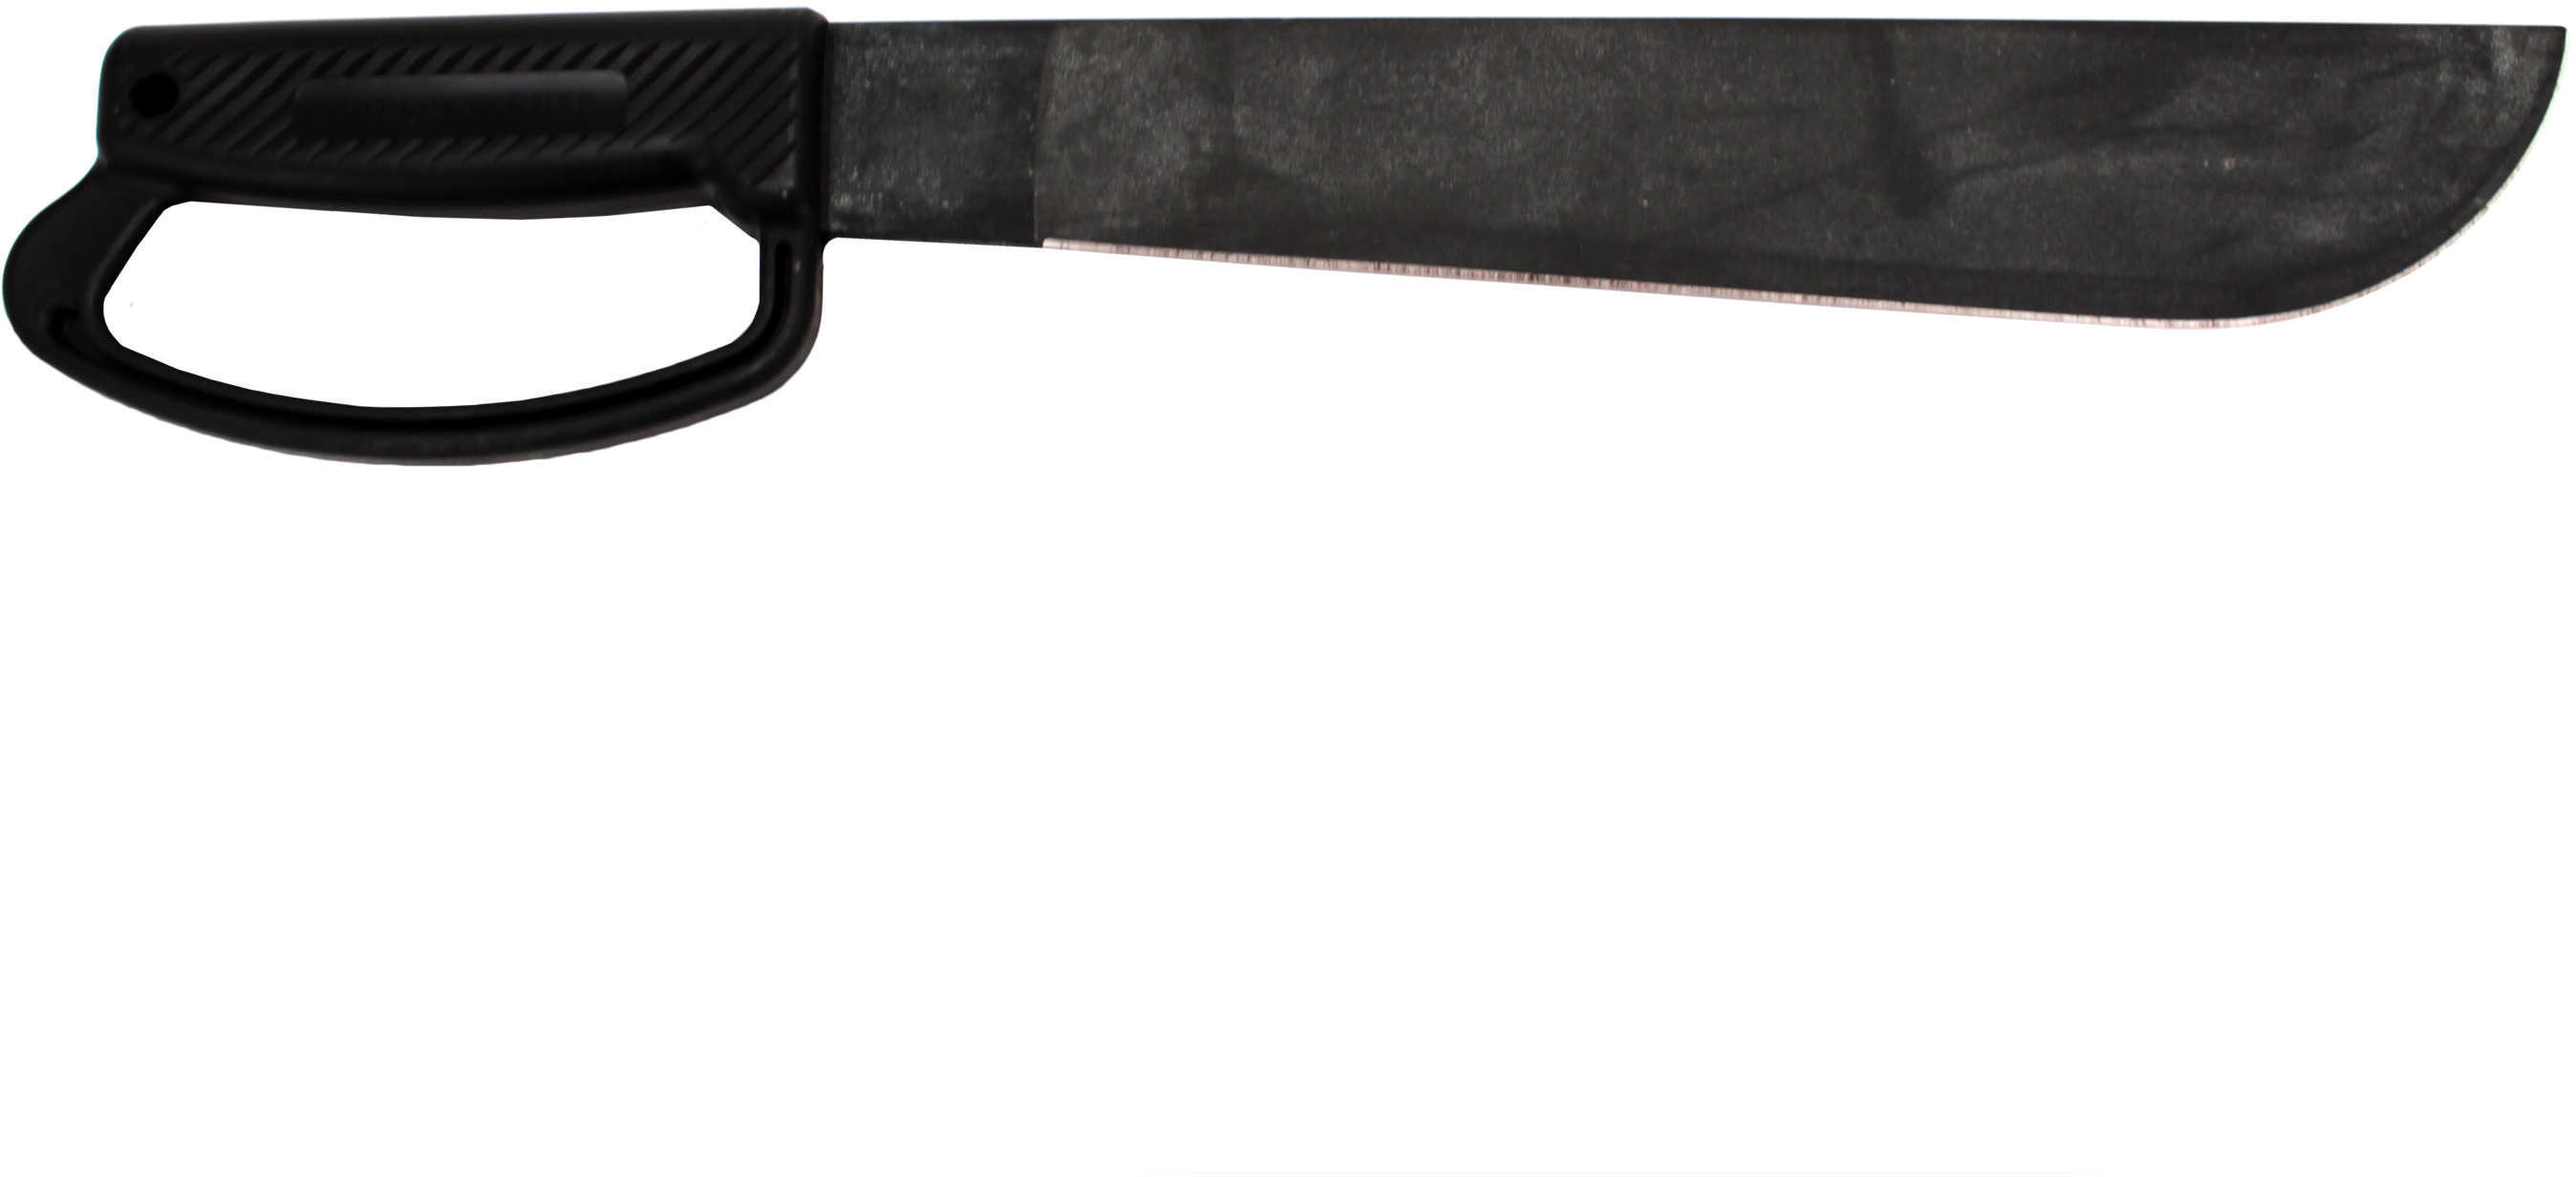 Ontario Knife Company OKC 12" Camper - Black "D" Handle - Bulk 8510